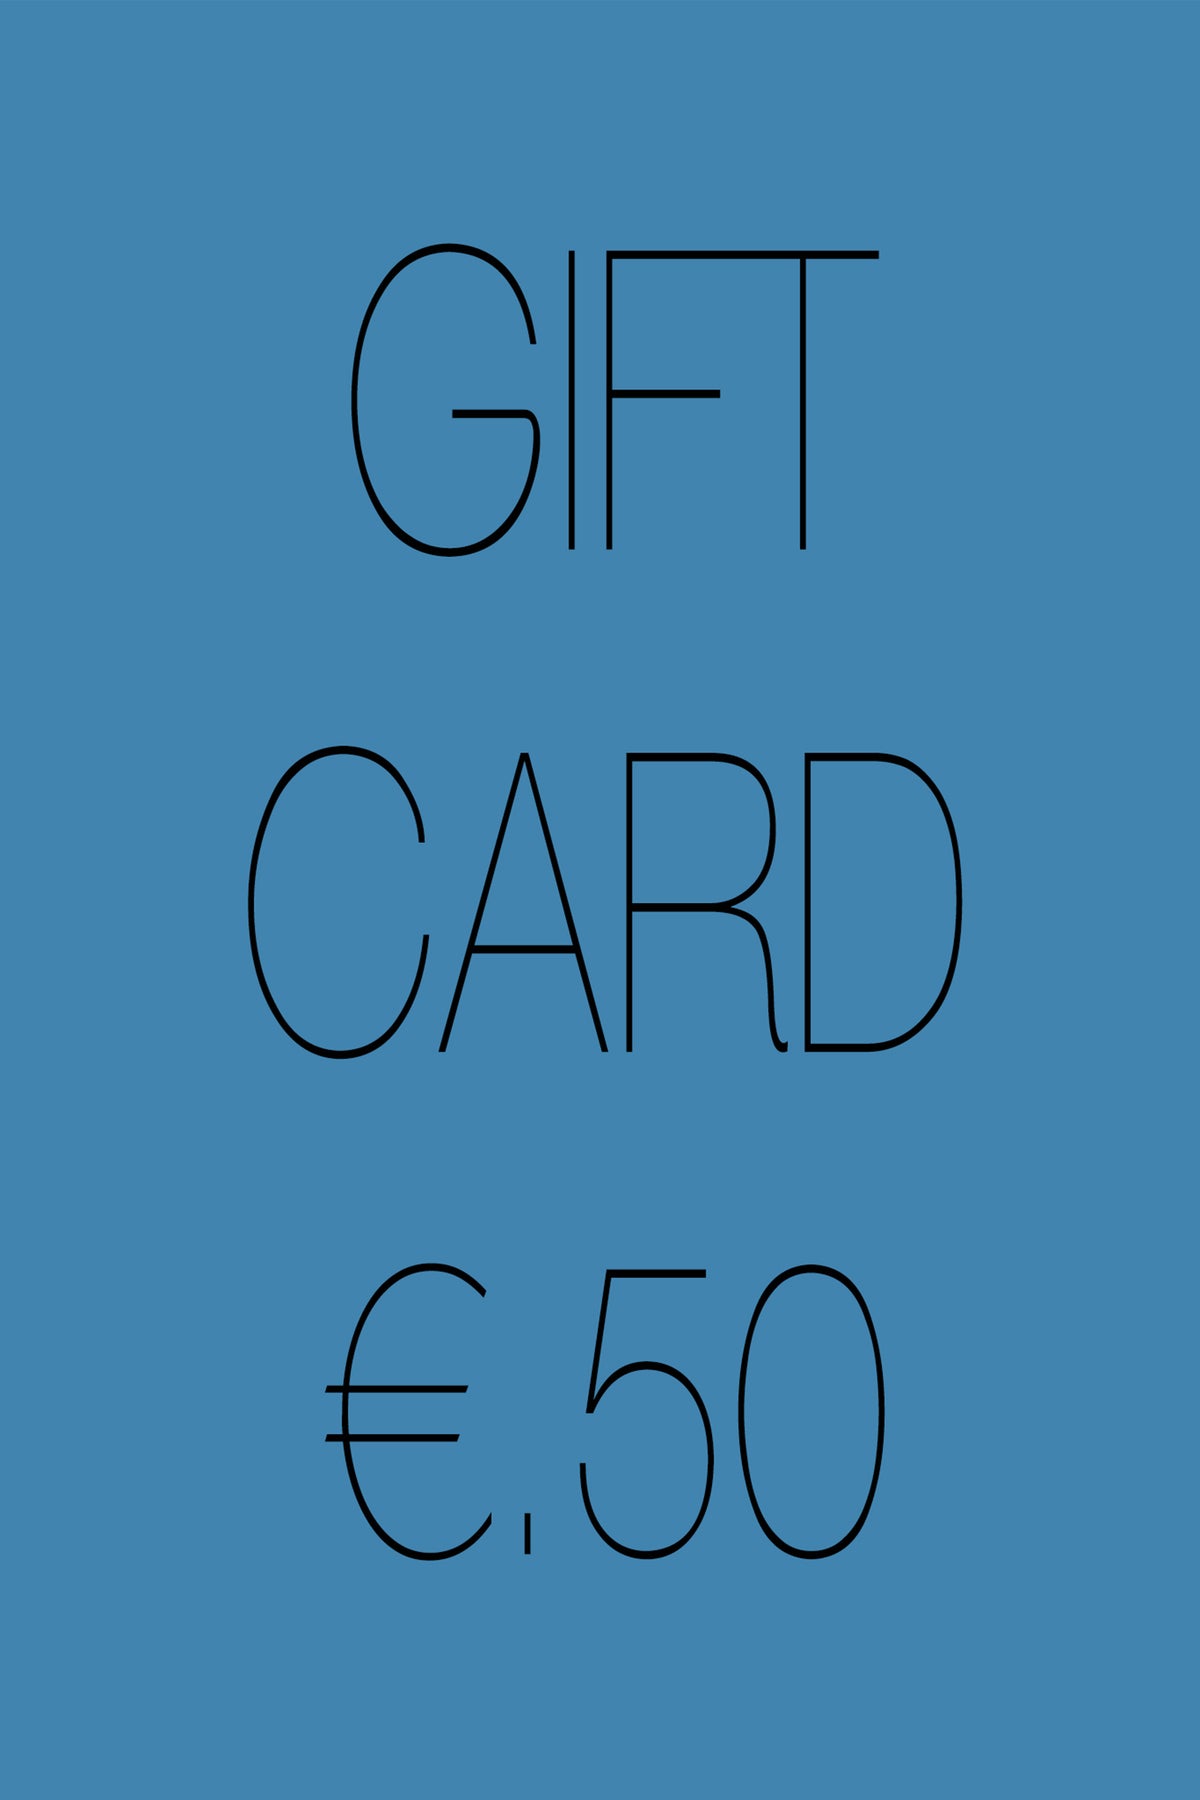 GIFT CARD €50.00